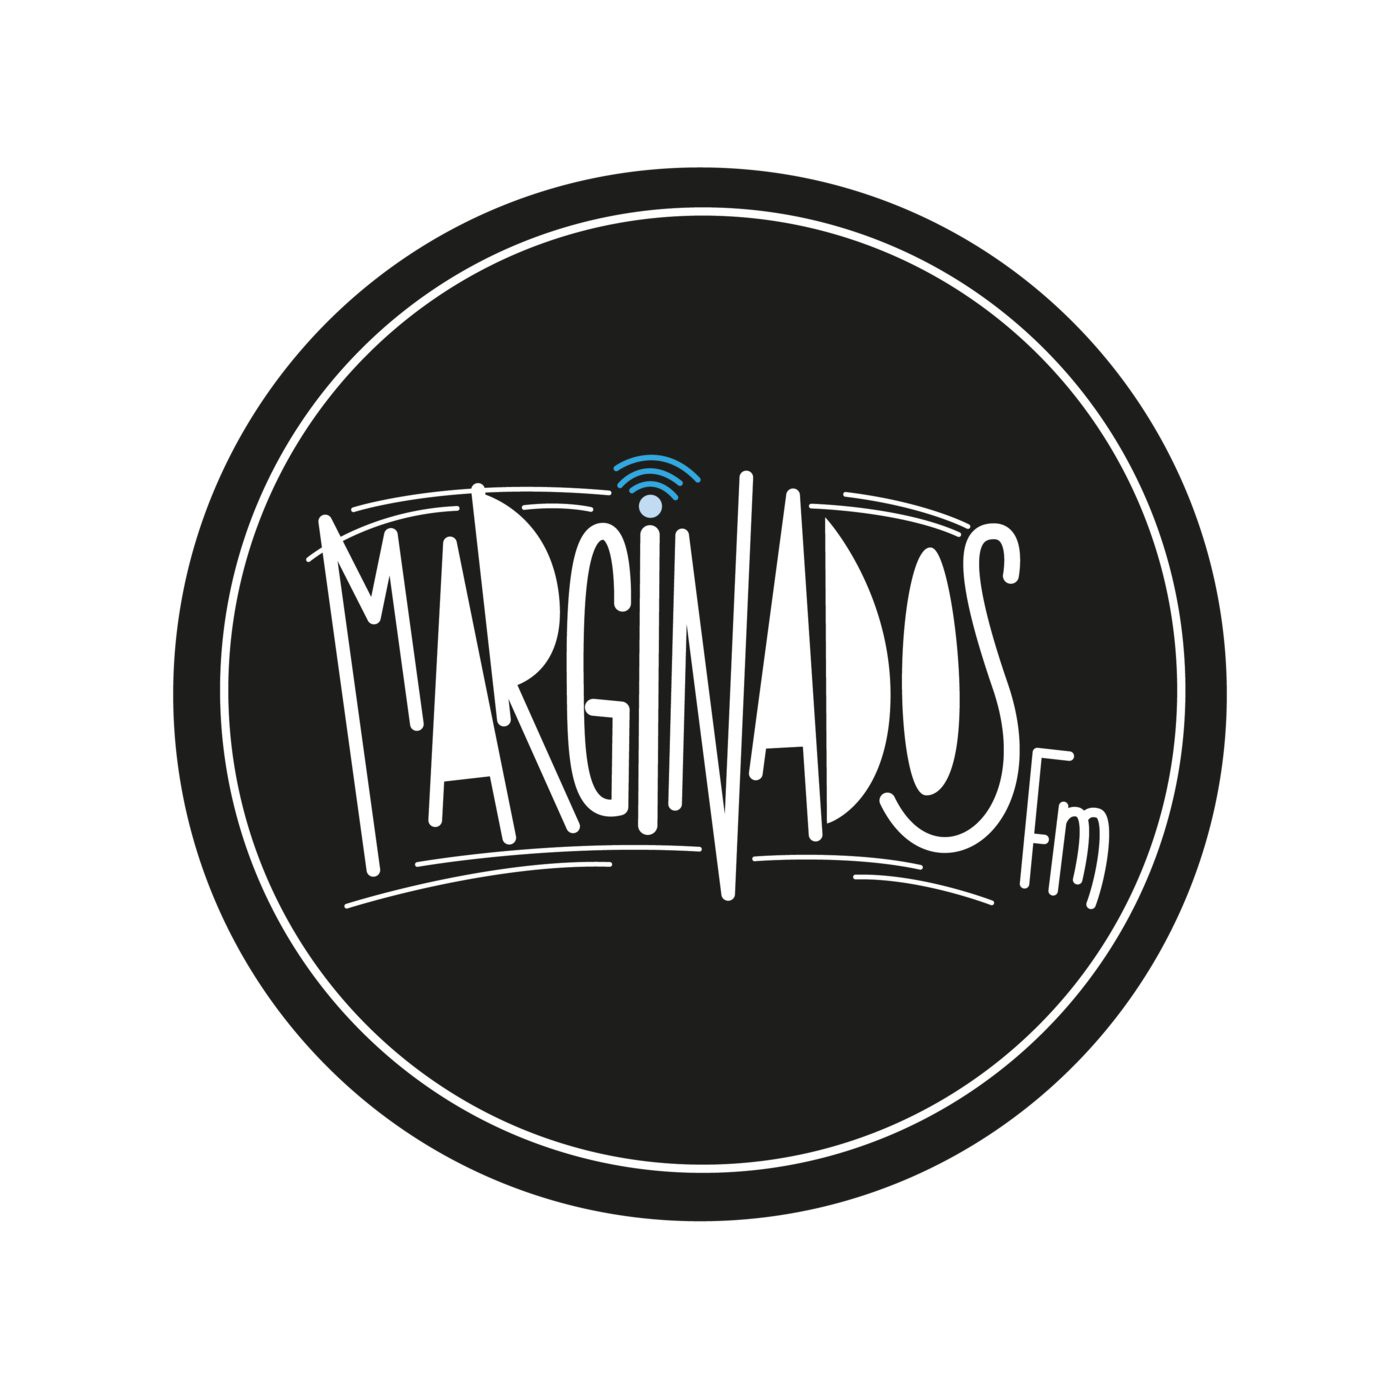 Marginados fm 26-08-14